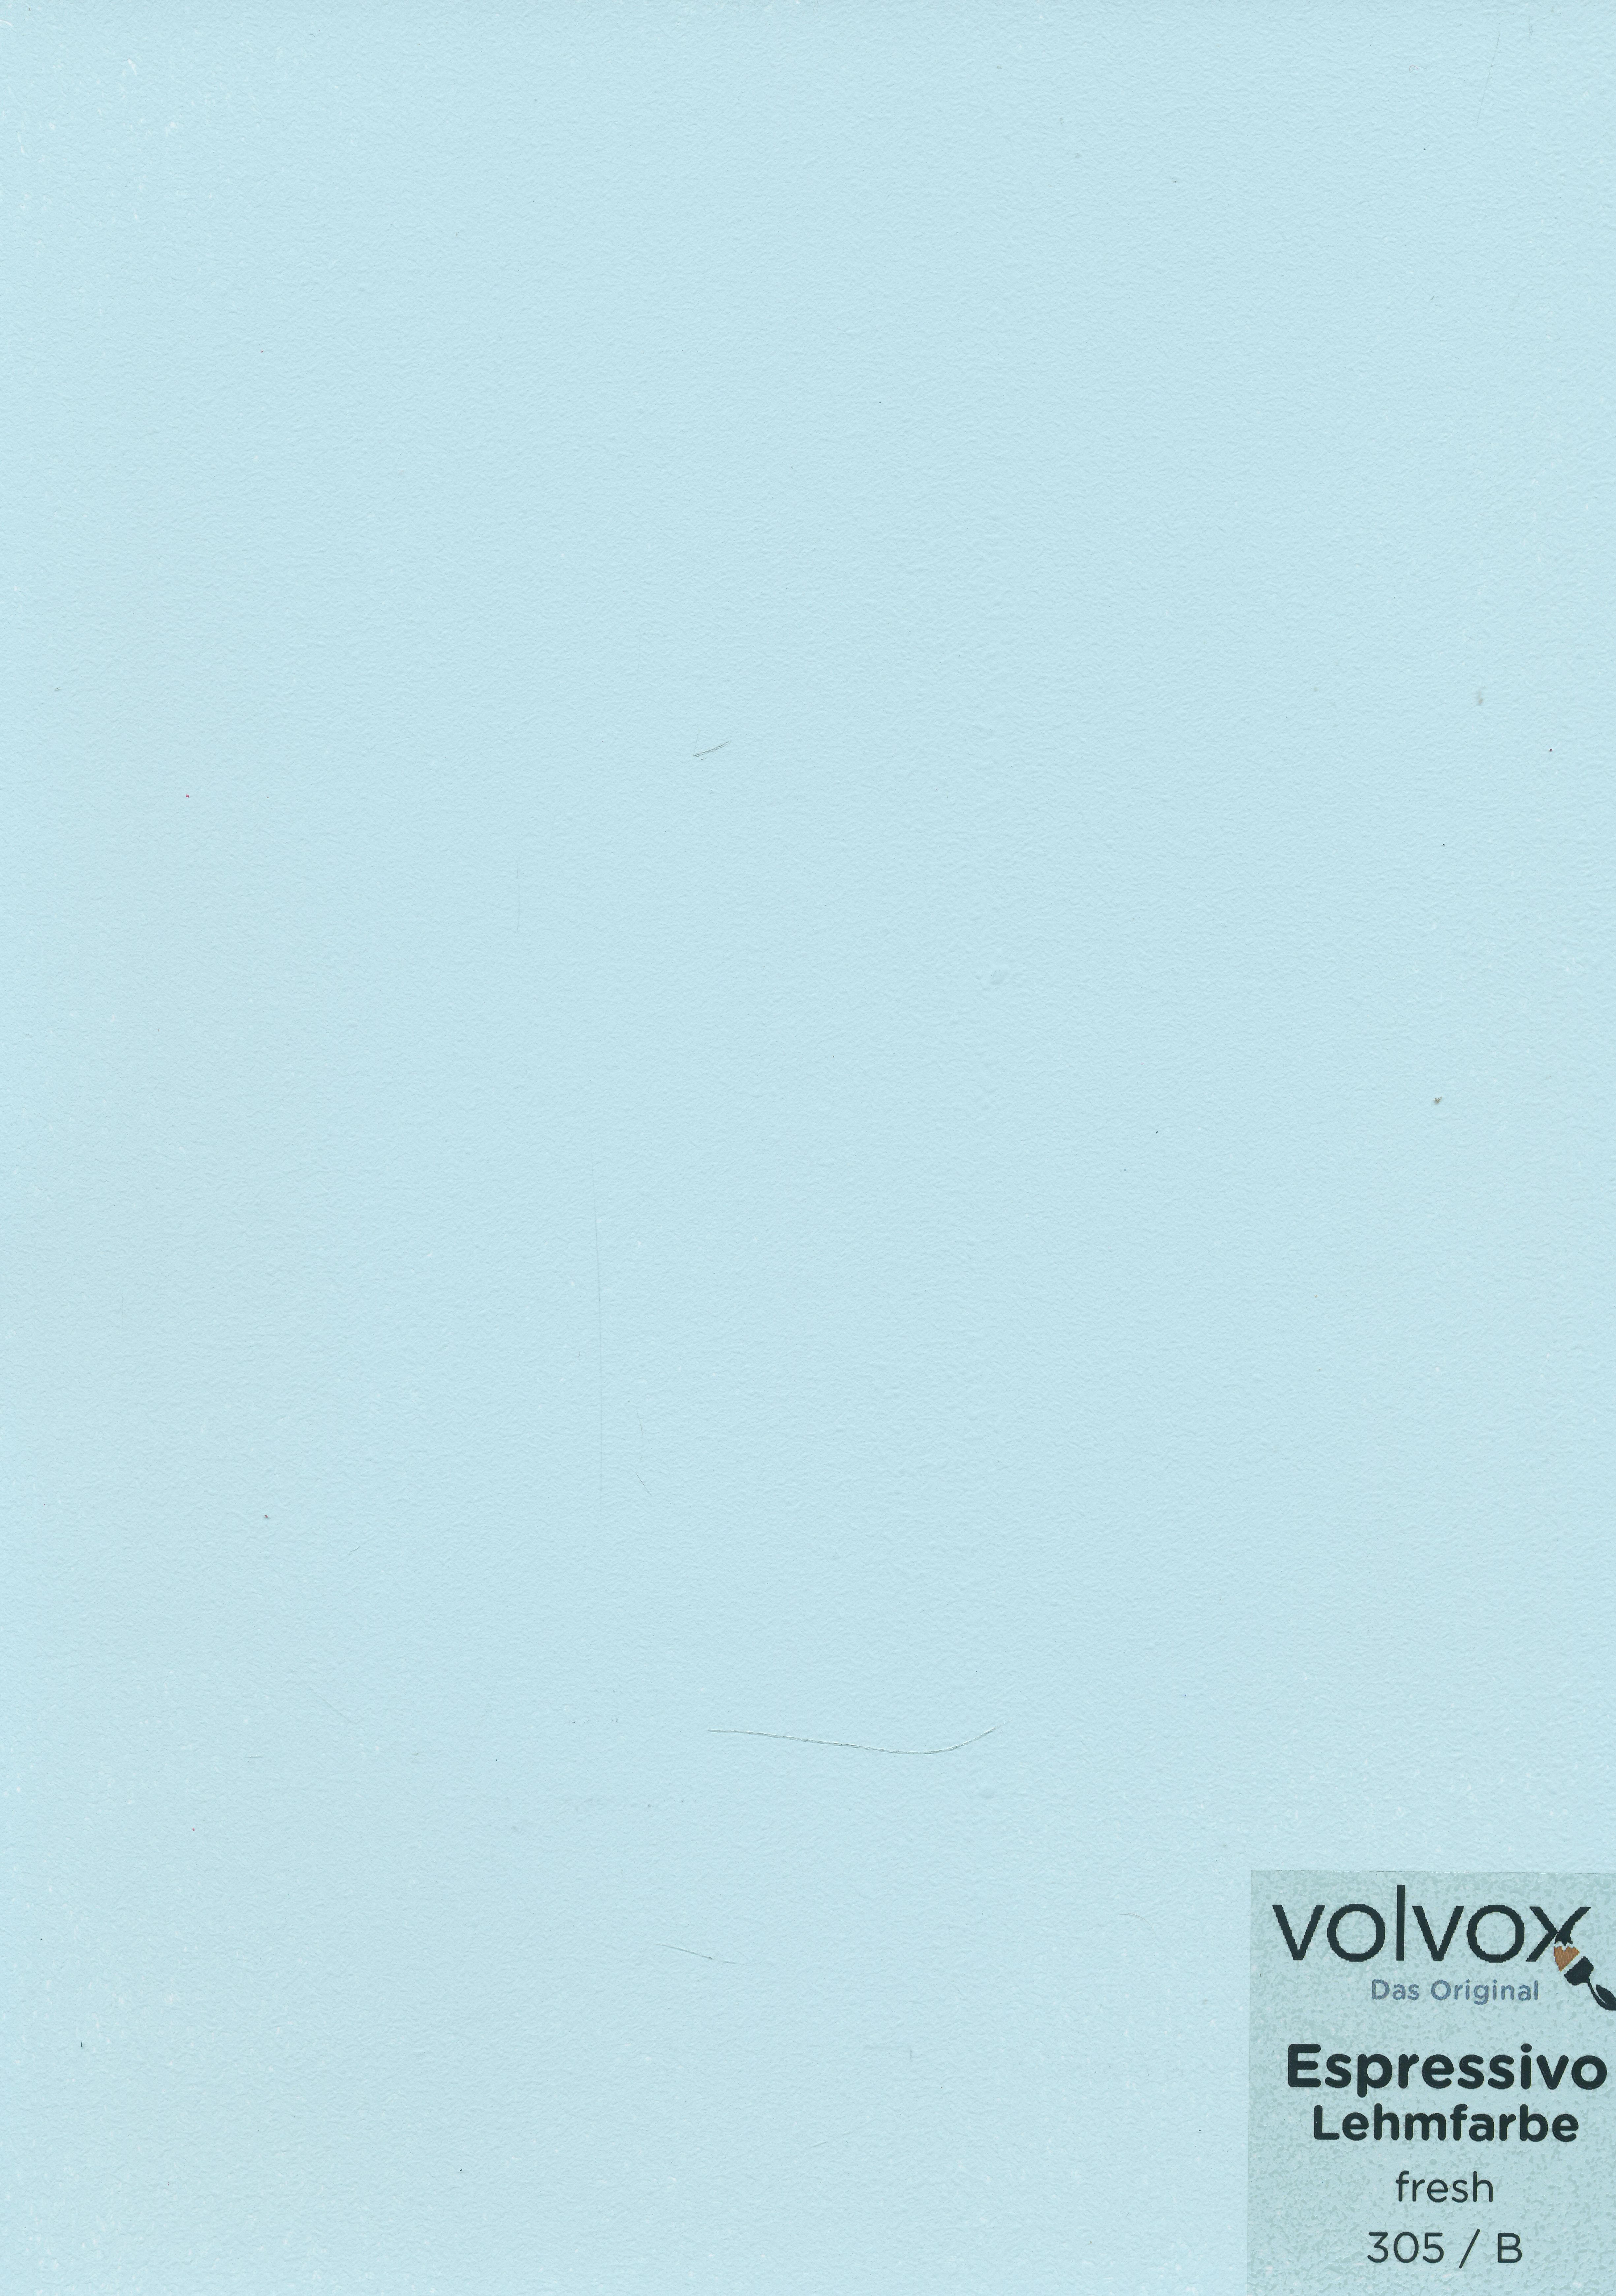 Volvox Espressivo Lehmfarbe 305 fresh